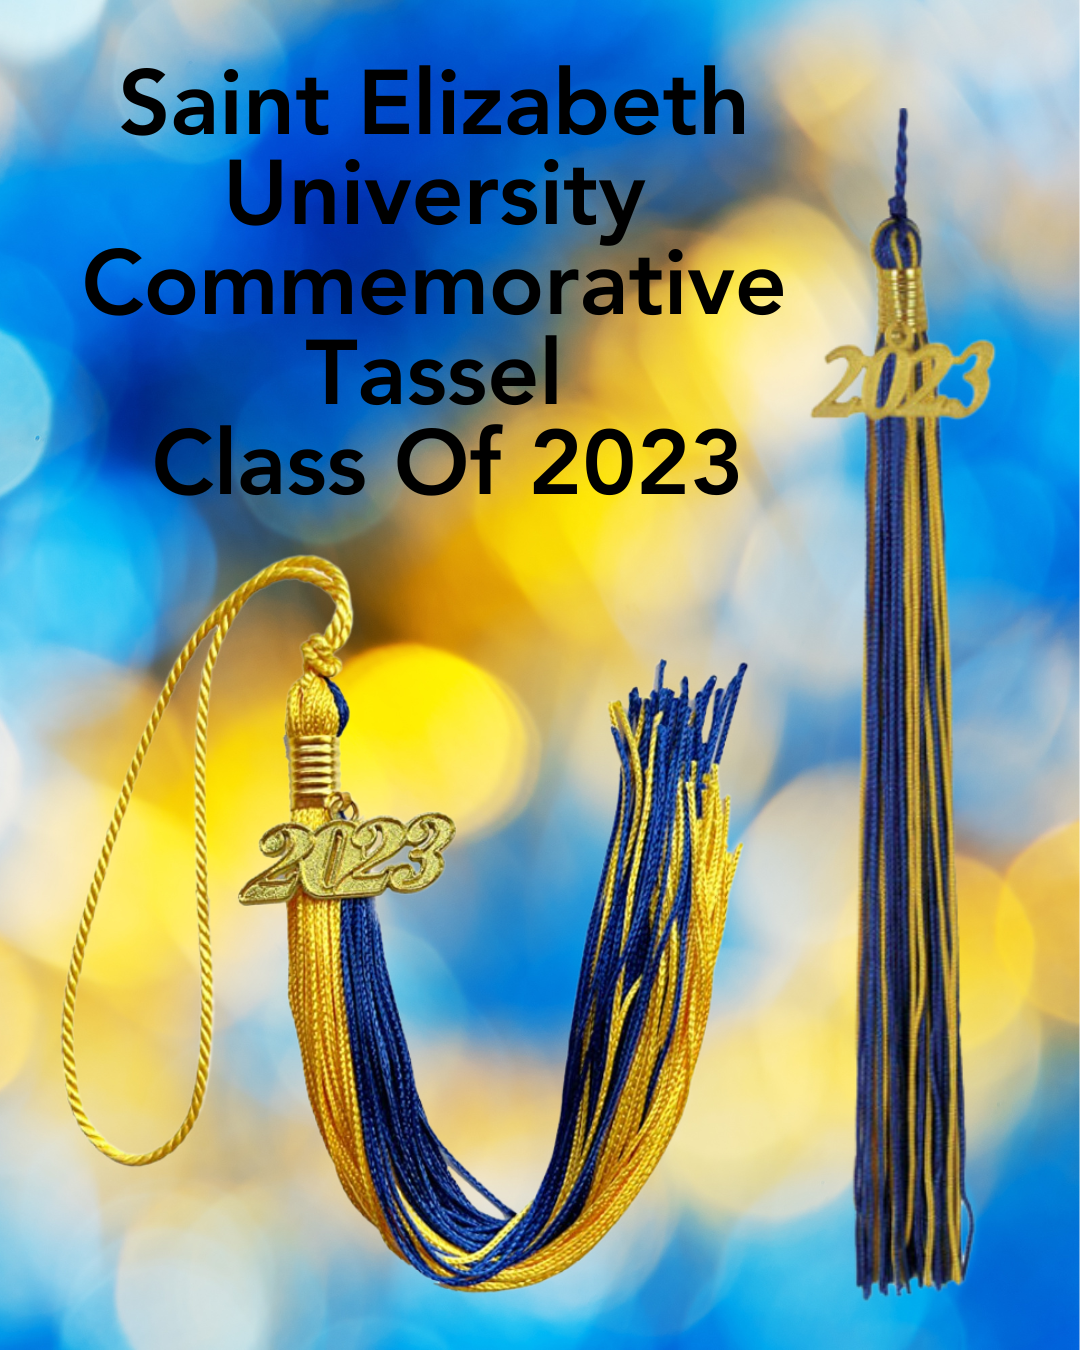 SEU 2023 Commemorative Tassel